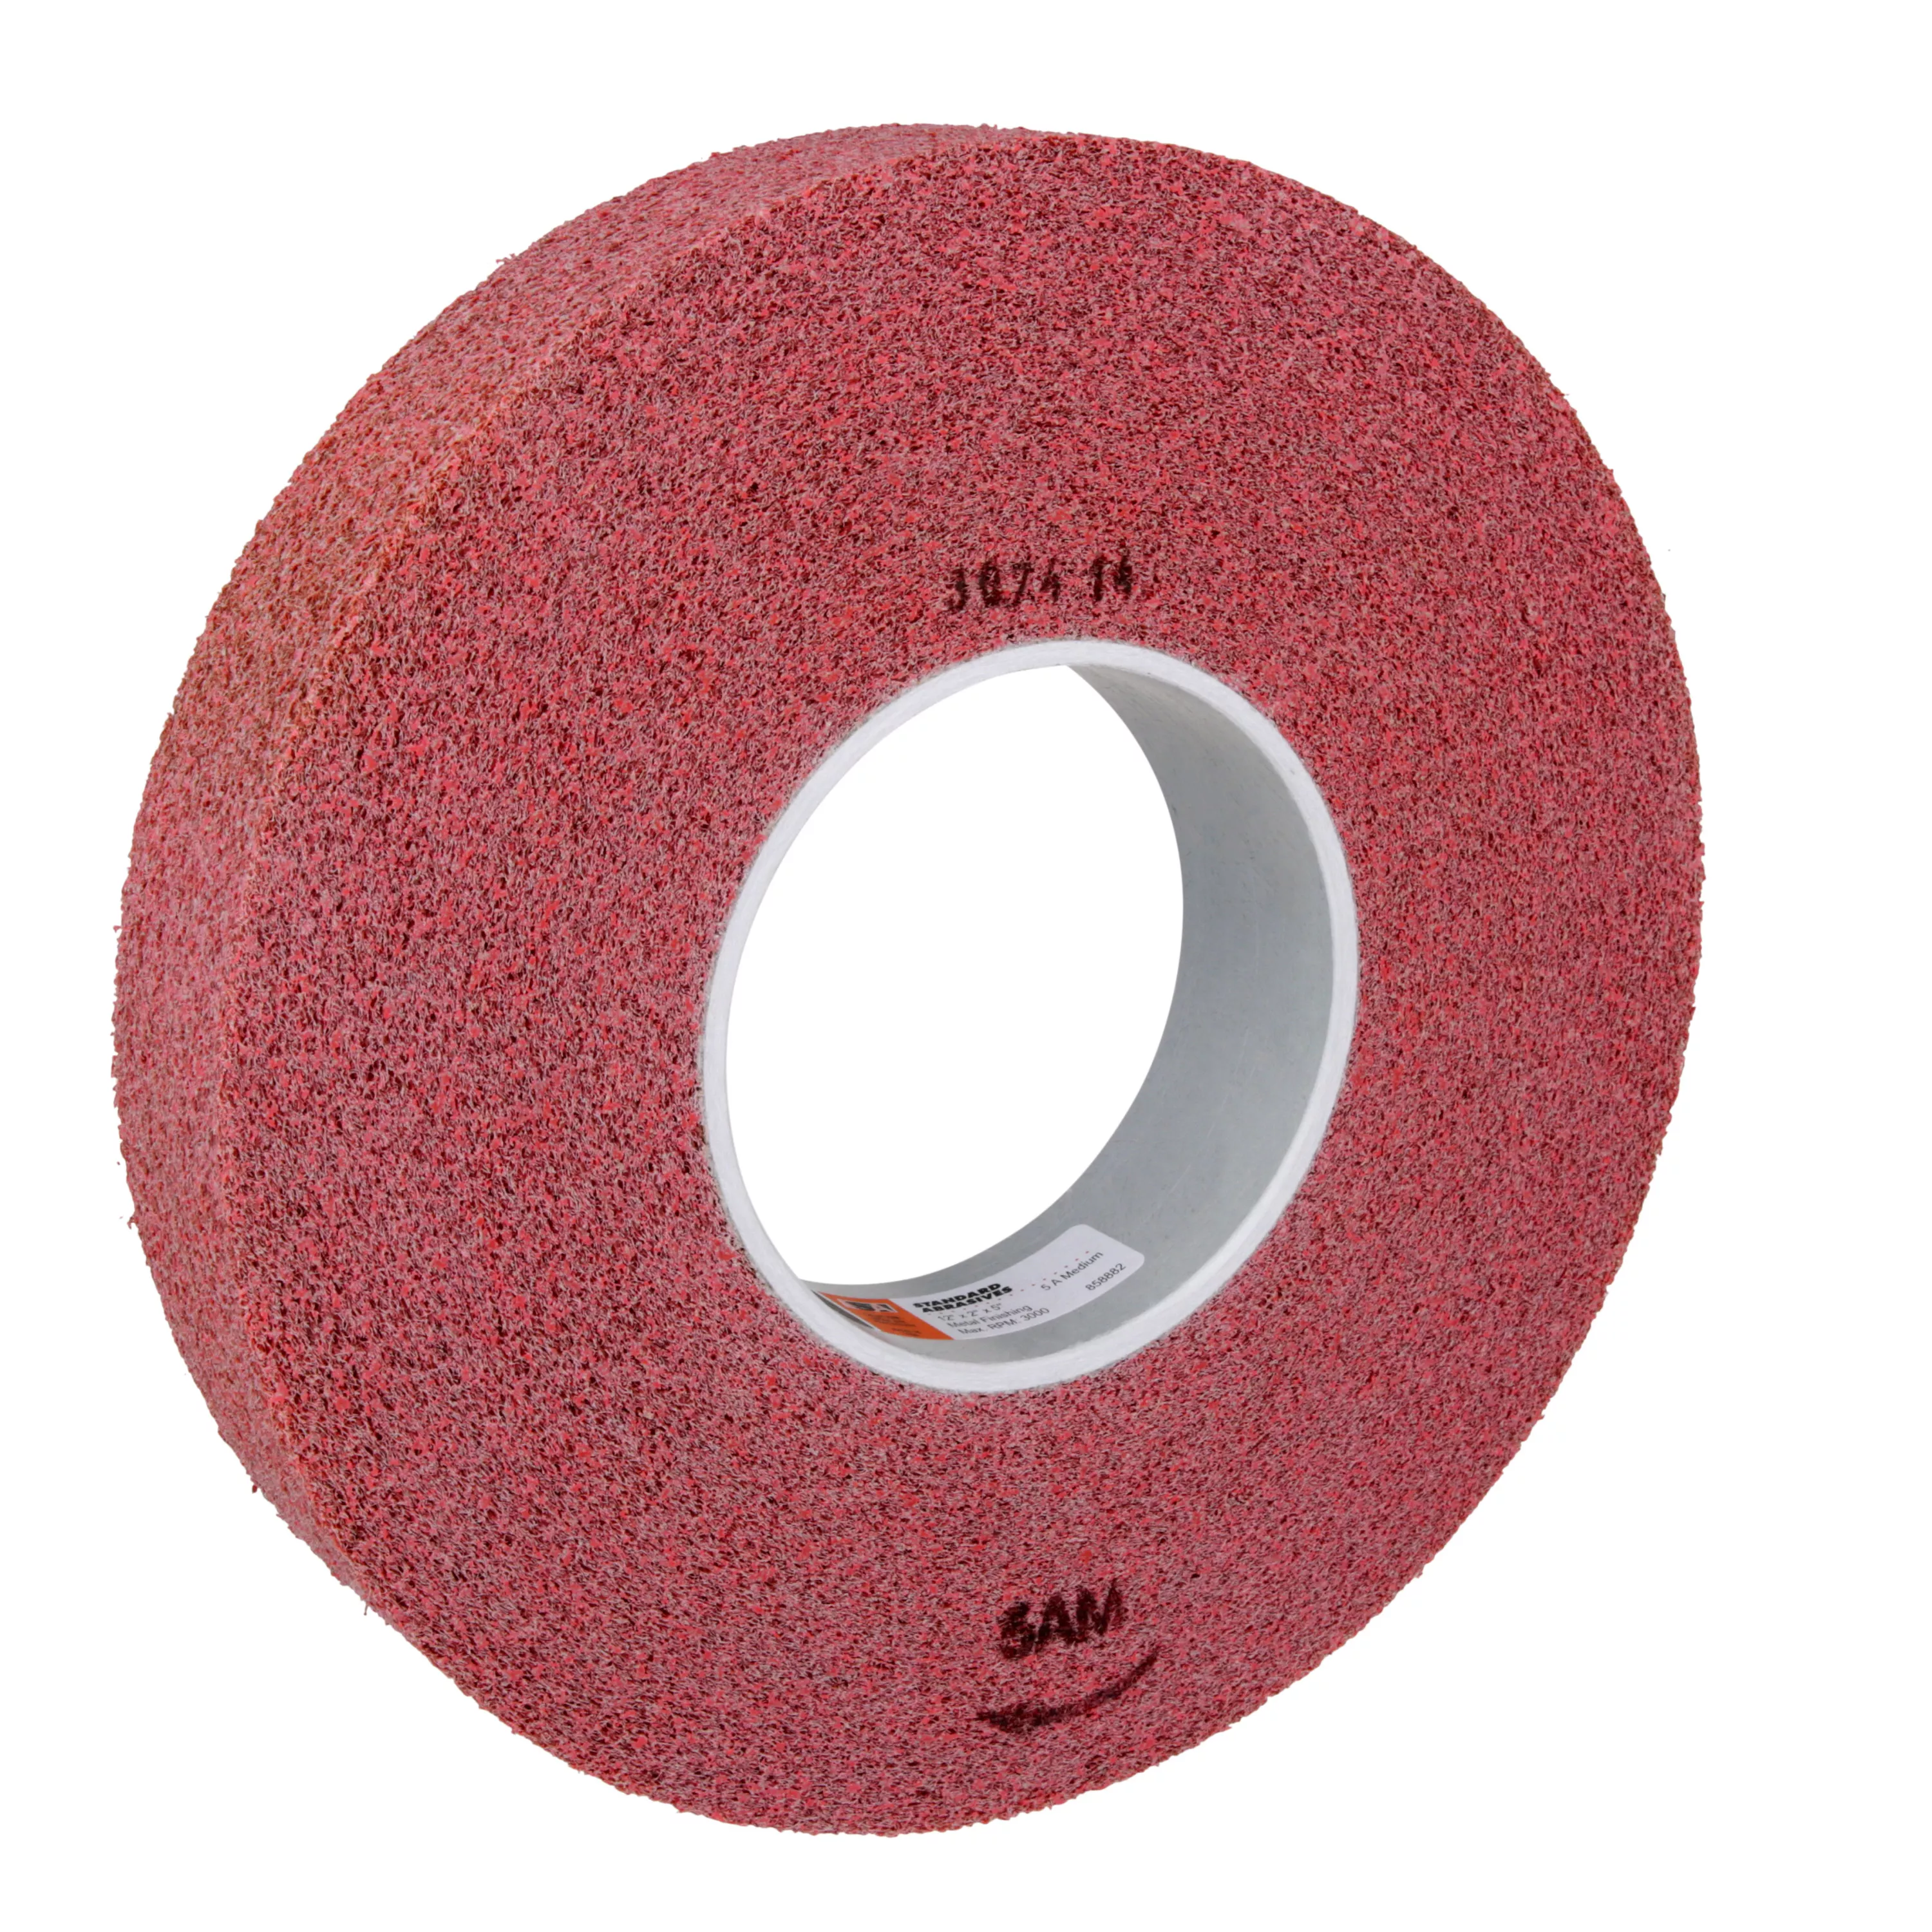 Product Number 858882 | Standard Abrasives™ Metal Finishing Wheel 858882